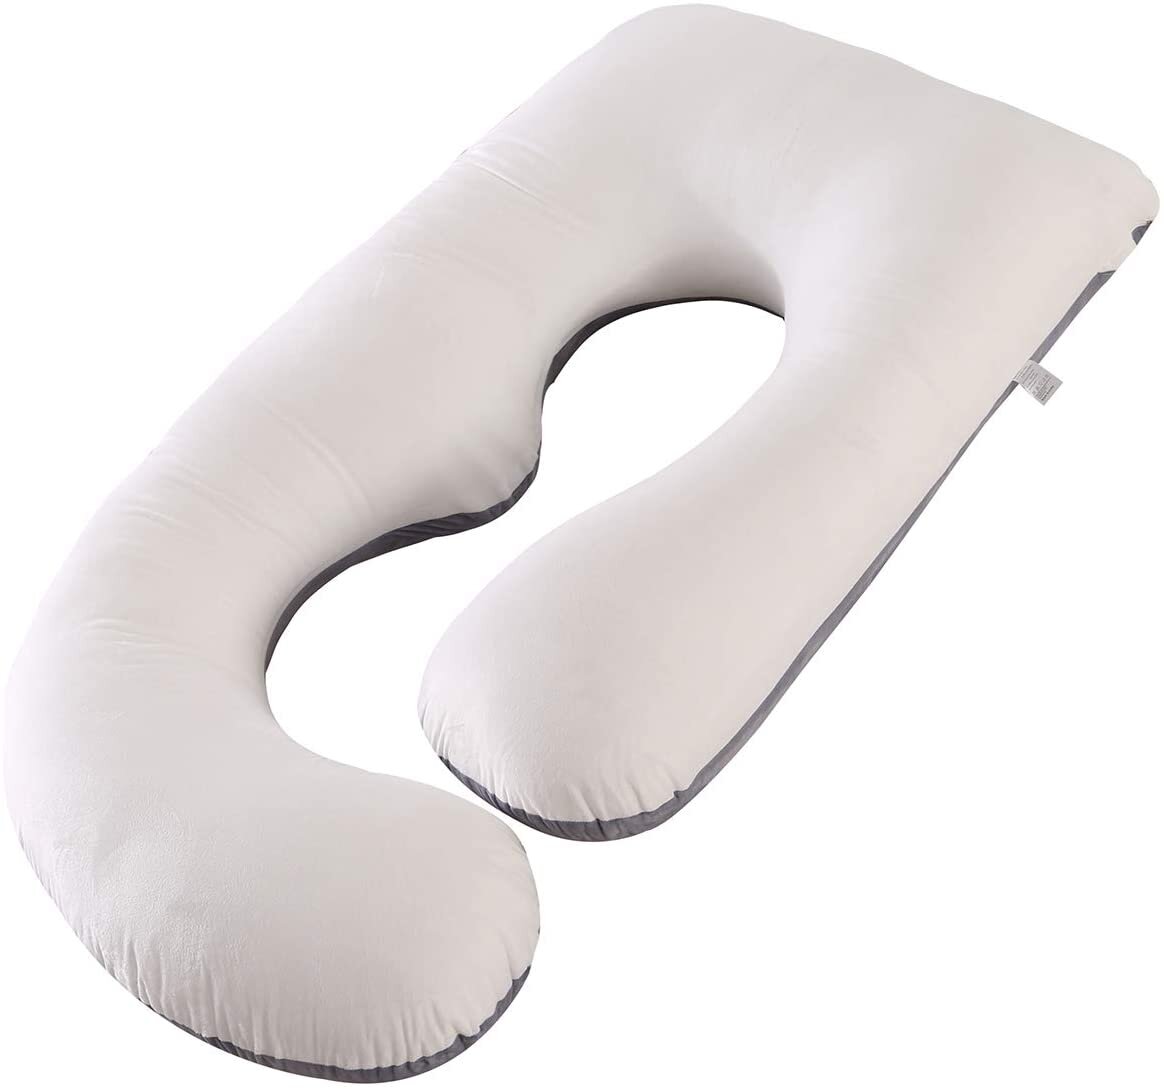 Fibromyalgia Pillow Nursing Pillow Maternity Pillow Pregnancy Pillow Sanggol J Shaped Body Pillow with 100% Cotton Cover 